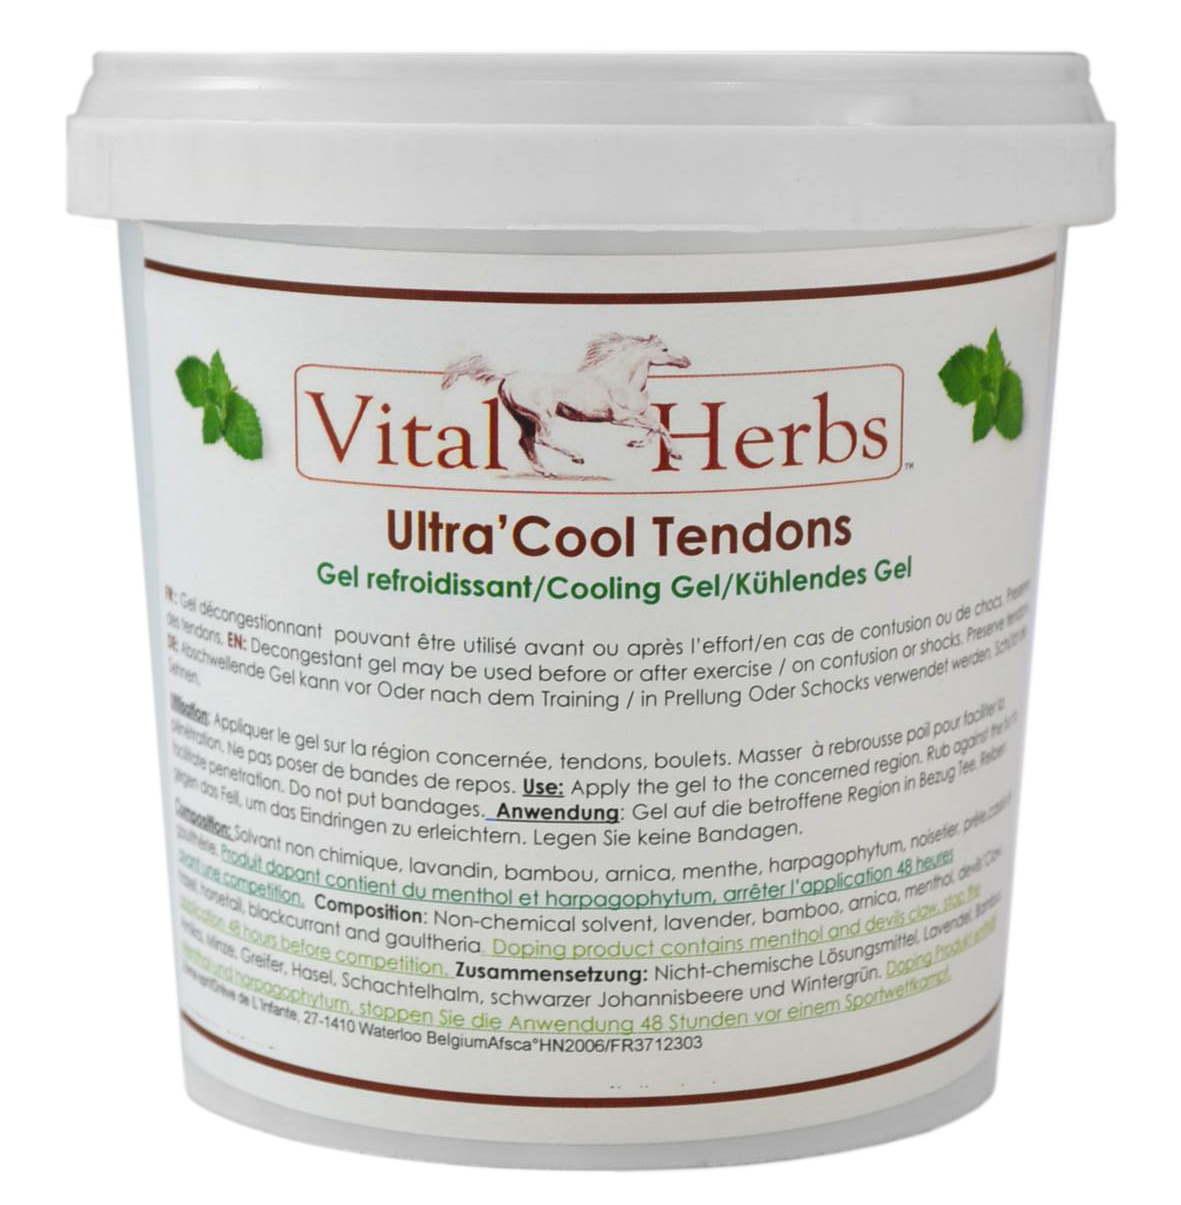 Vital Herbs Ultra cool tendons